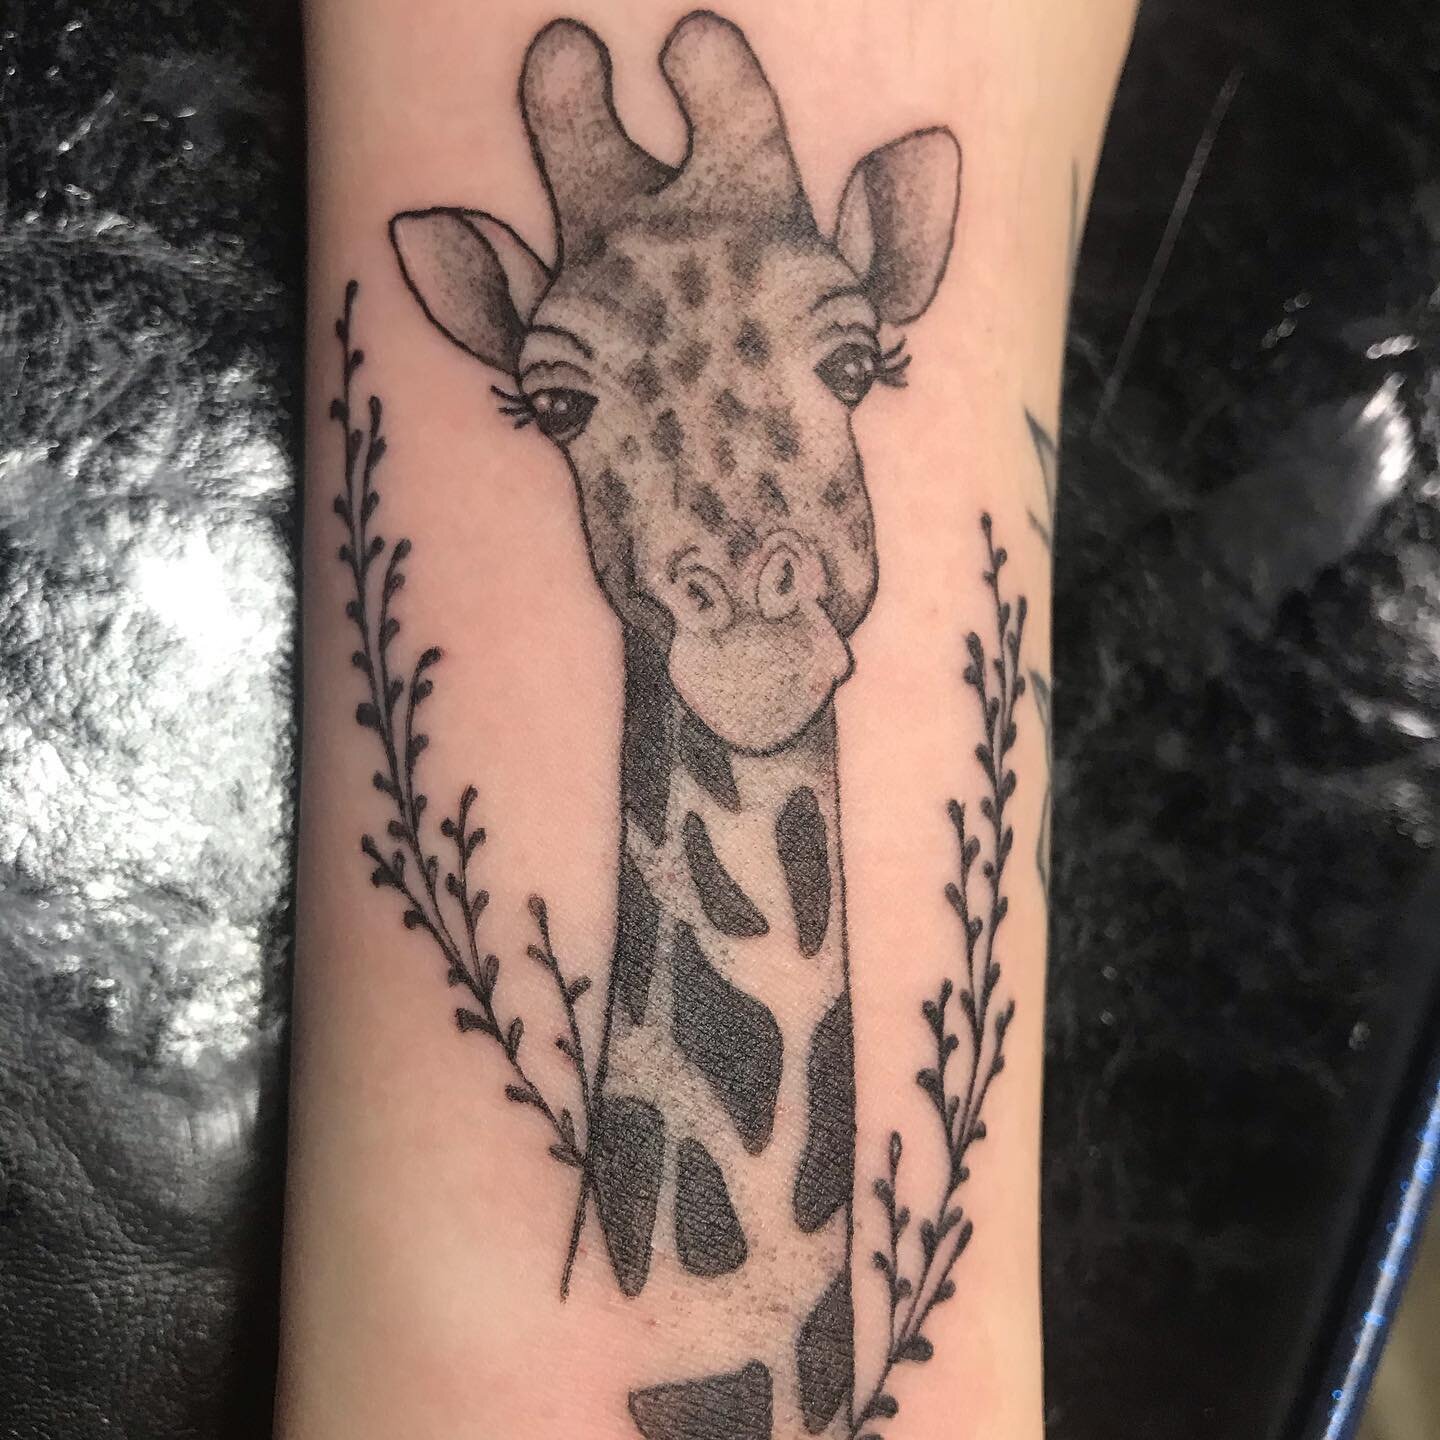 Good thing she likes giraffes 🦒